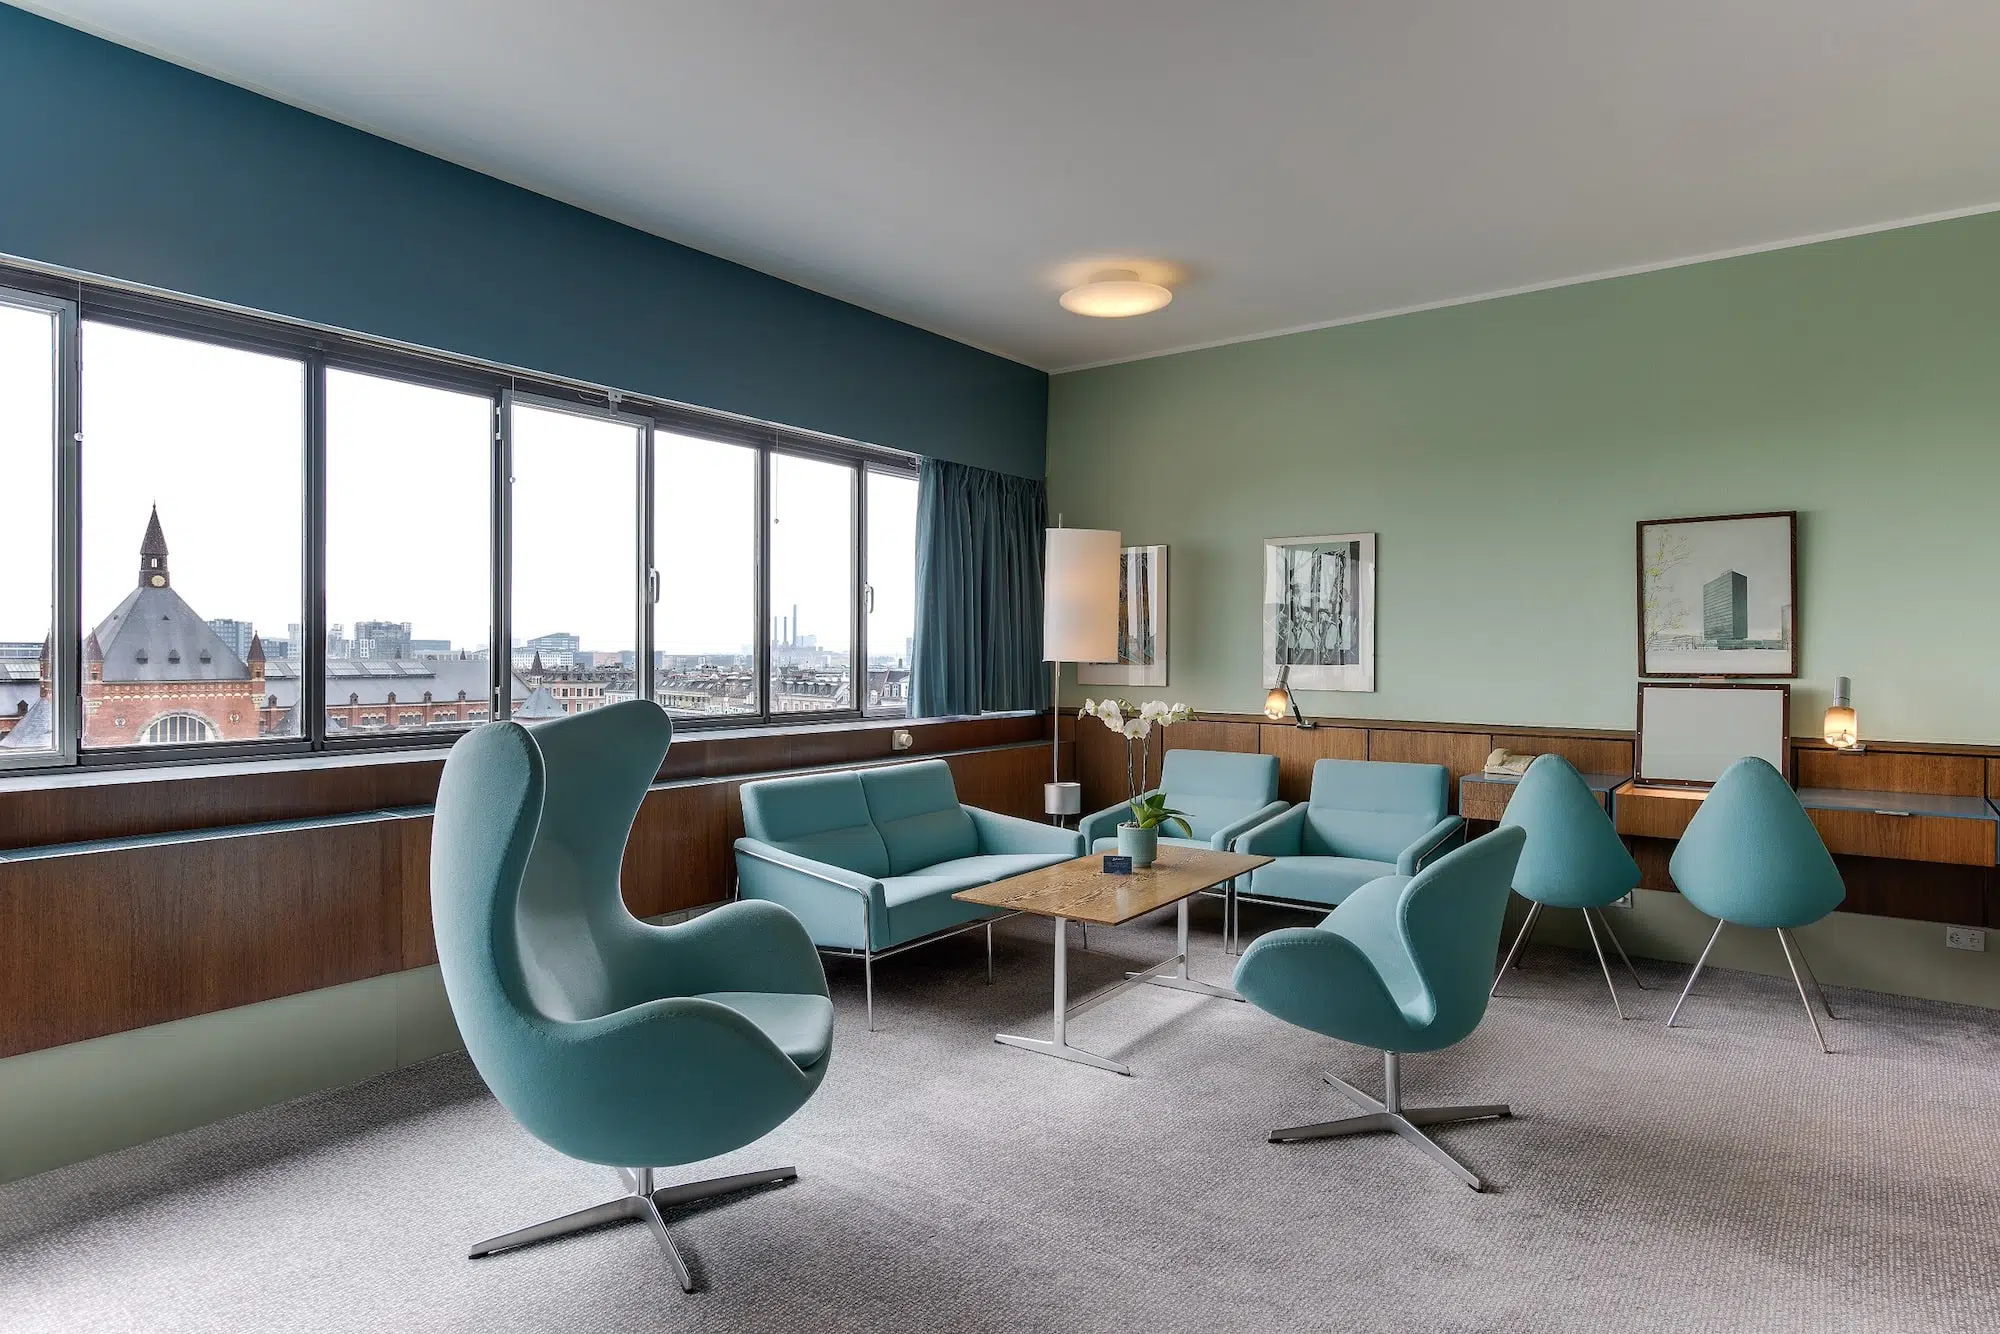 Room 606, the Arne Jacobsen Suite, at the Radisson Blu Royal Hotel in Copenhagen